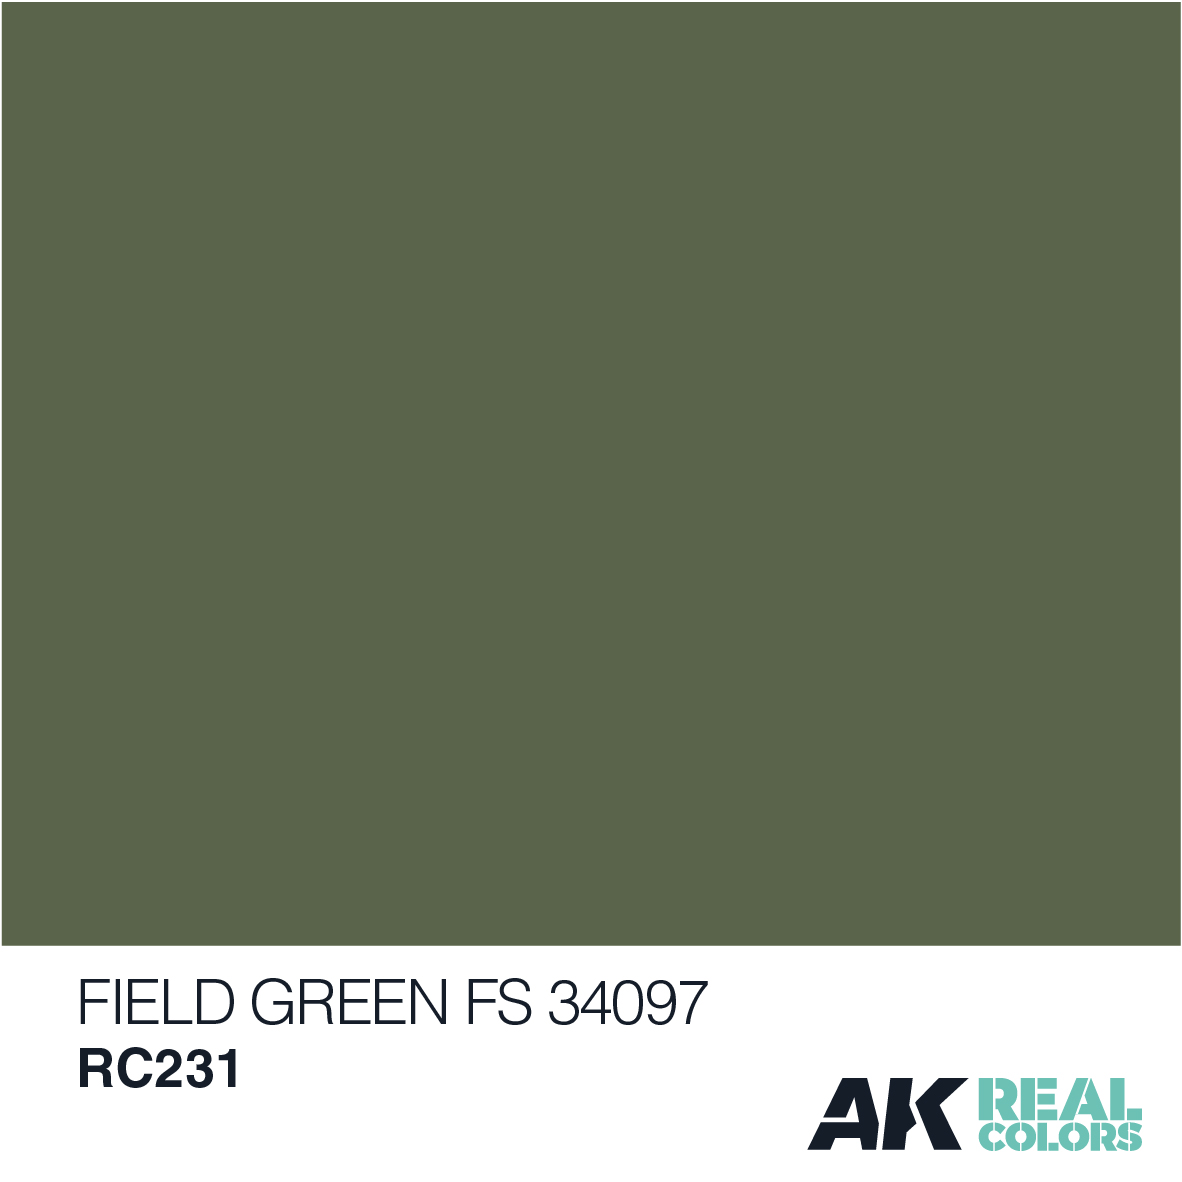 Field Green FS 34097